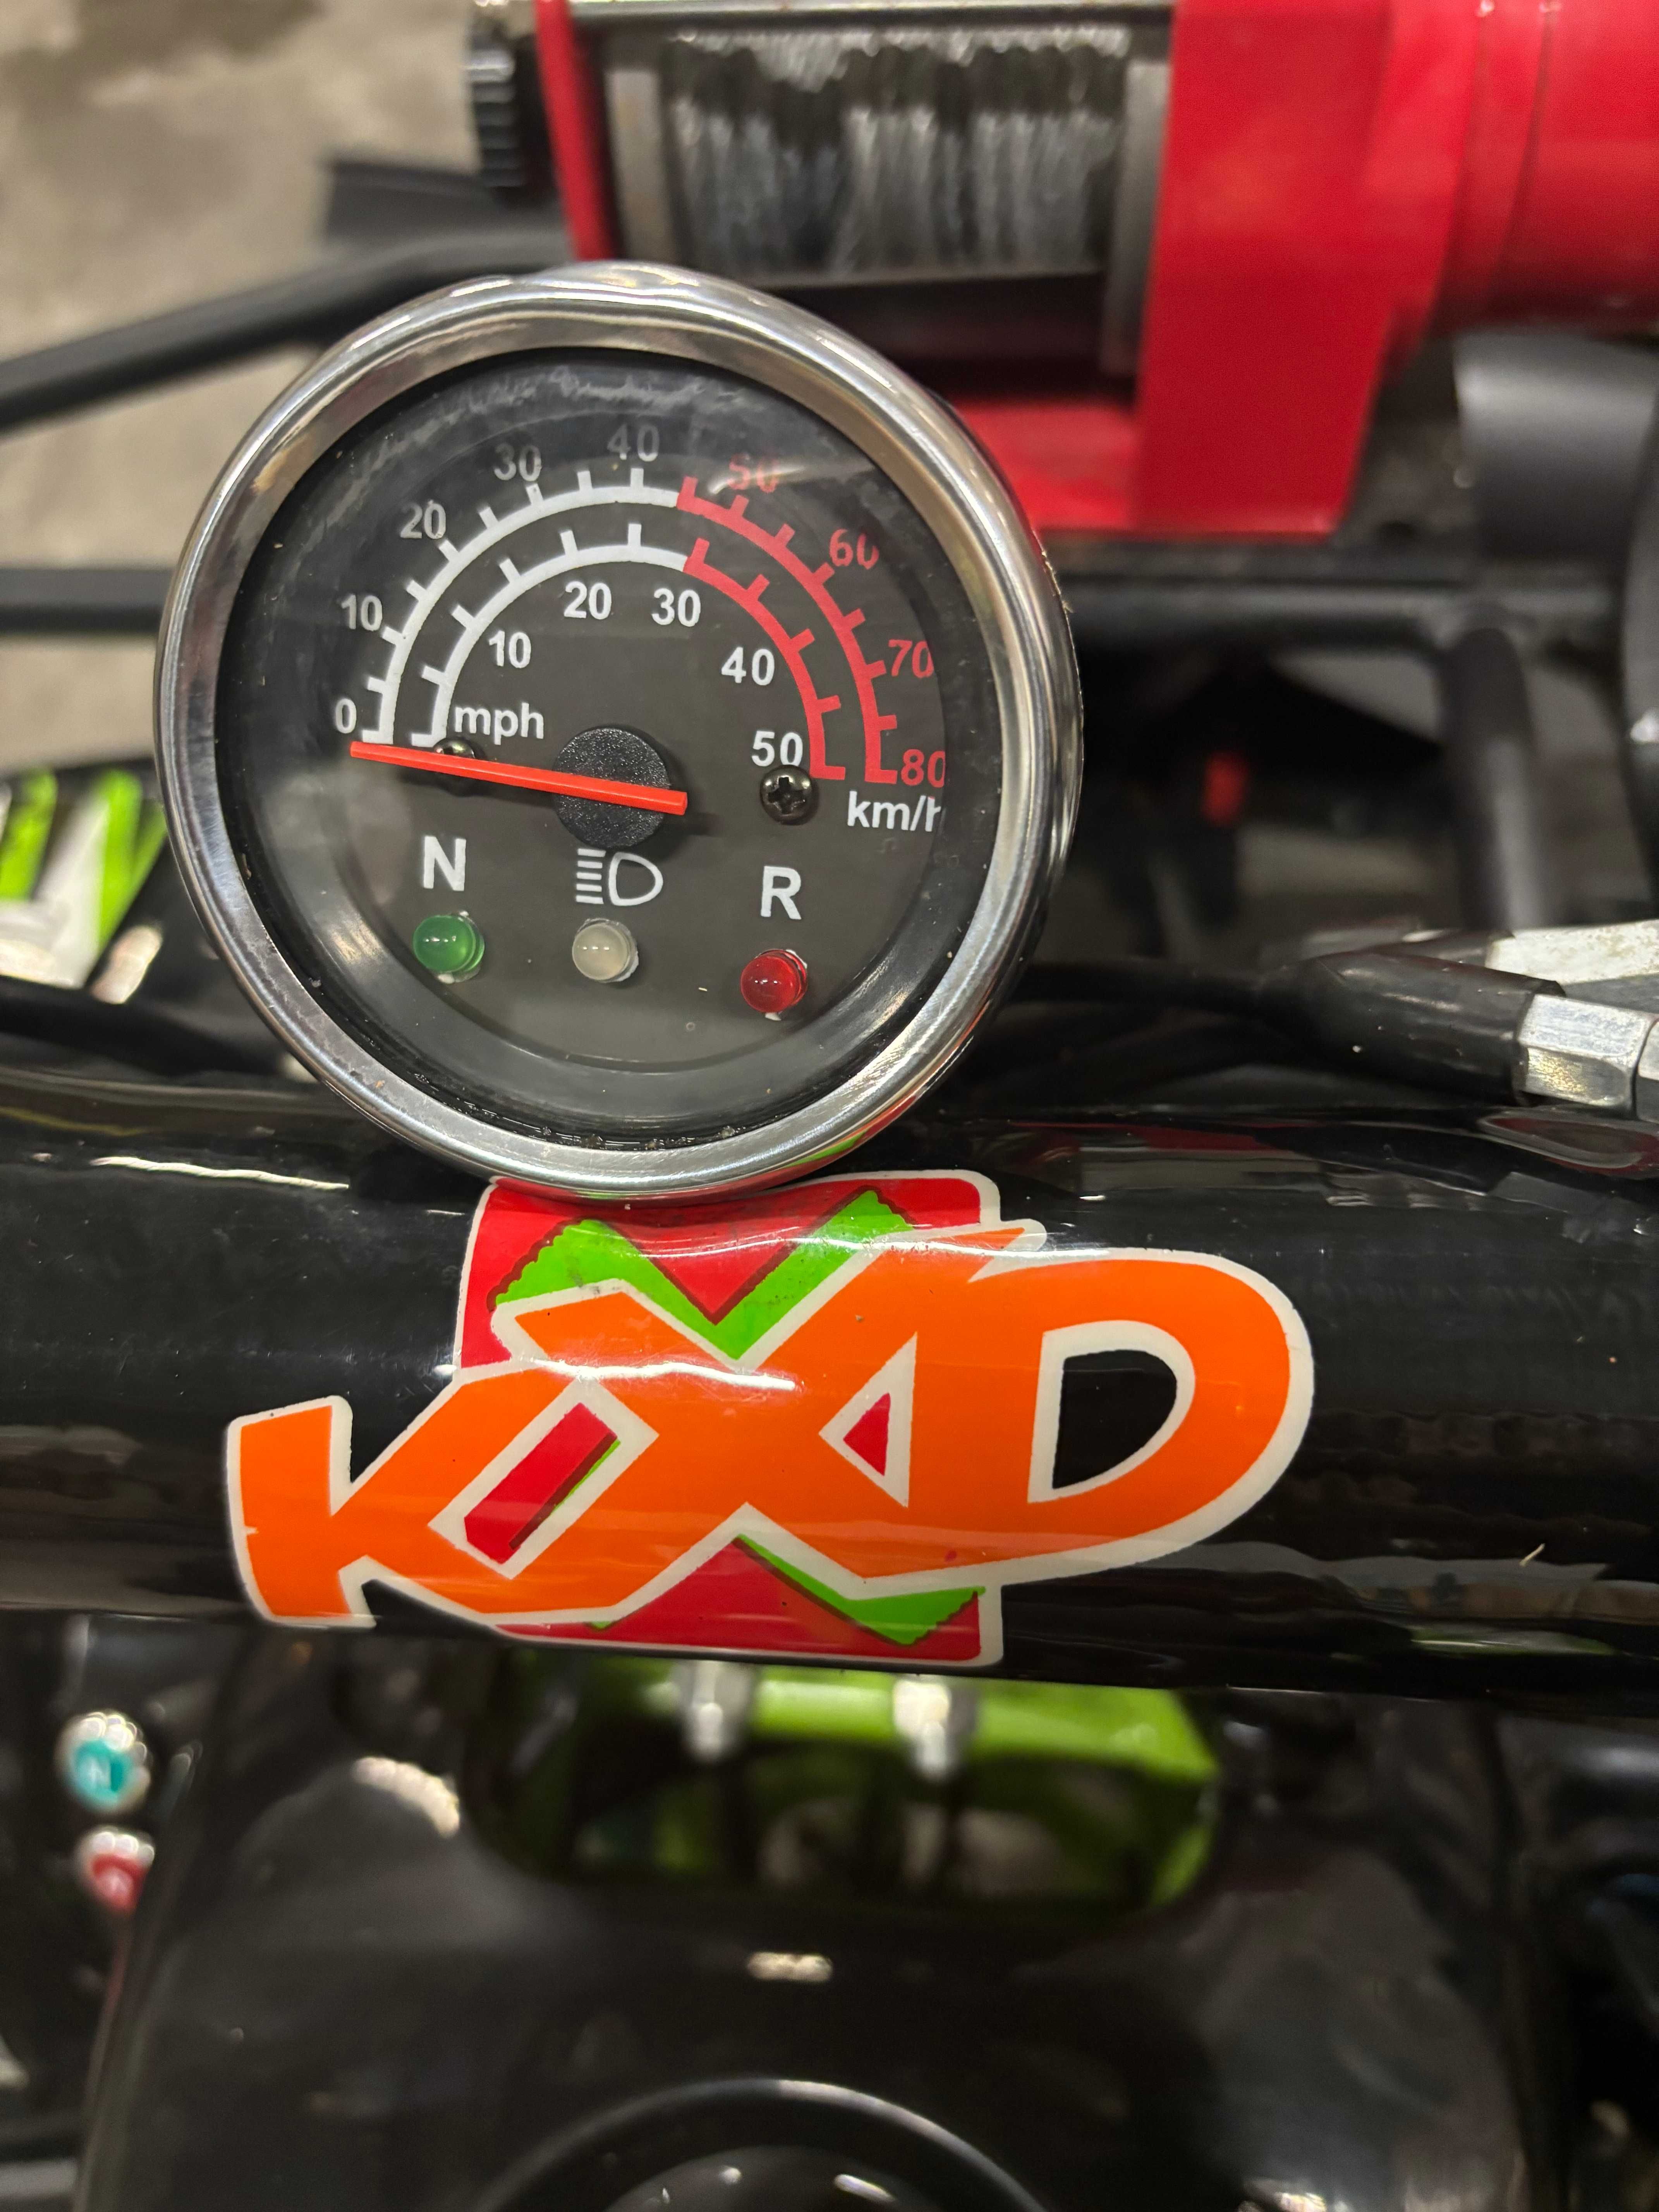 Quad kxd pro 125cc